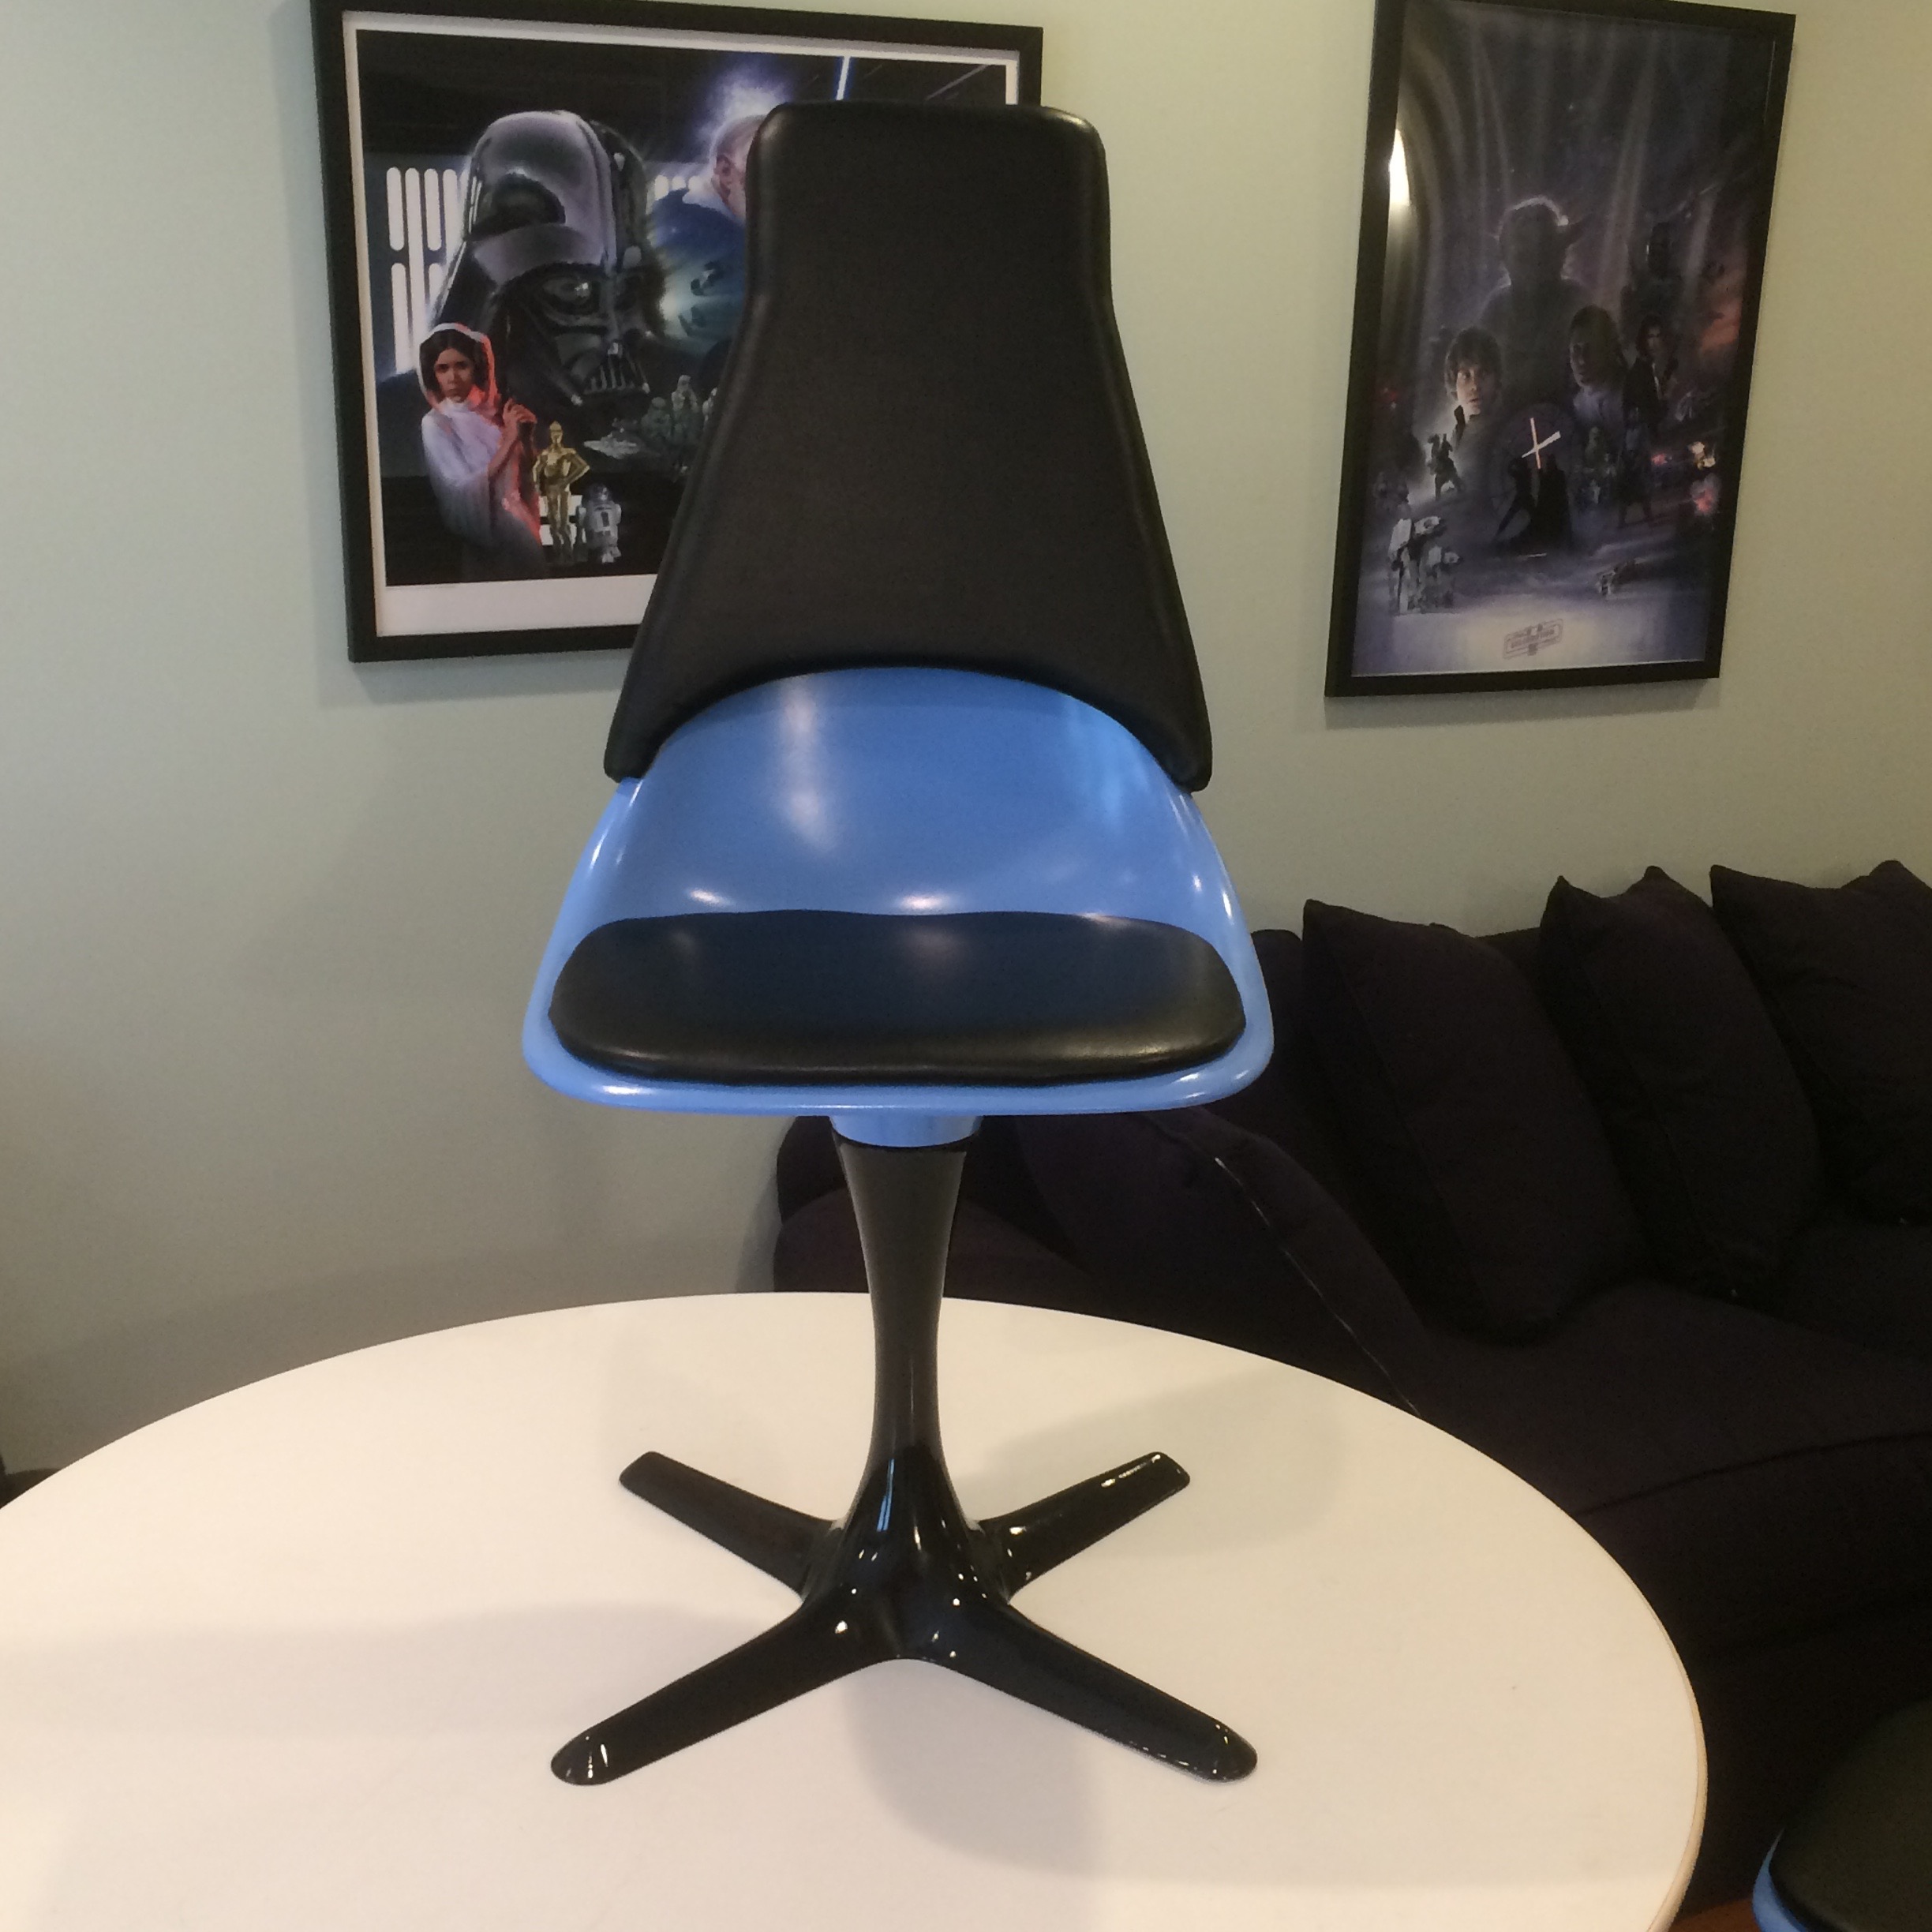 Triangles to upgrade Burke chair to Star Trek bridge chair 